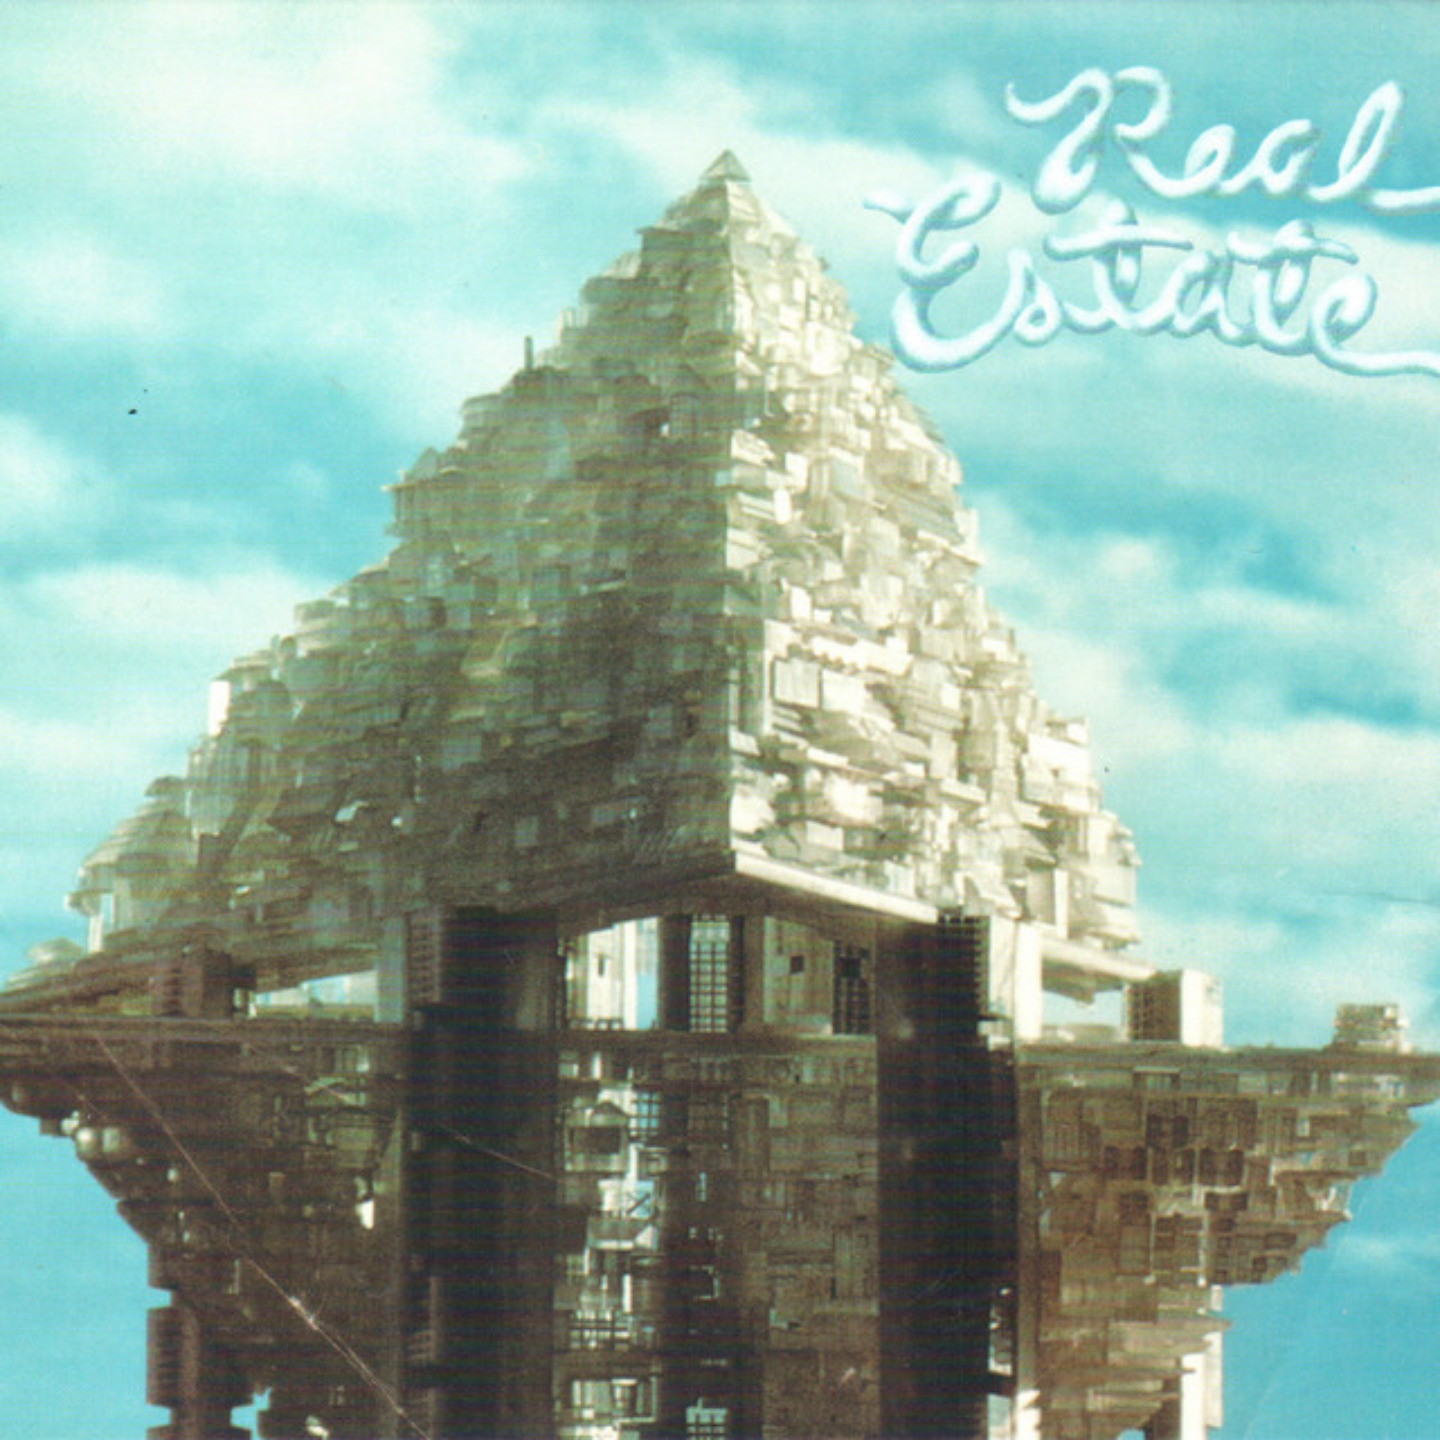 REAL ESTATE - Real Estate LP